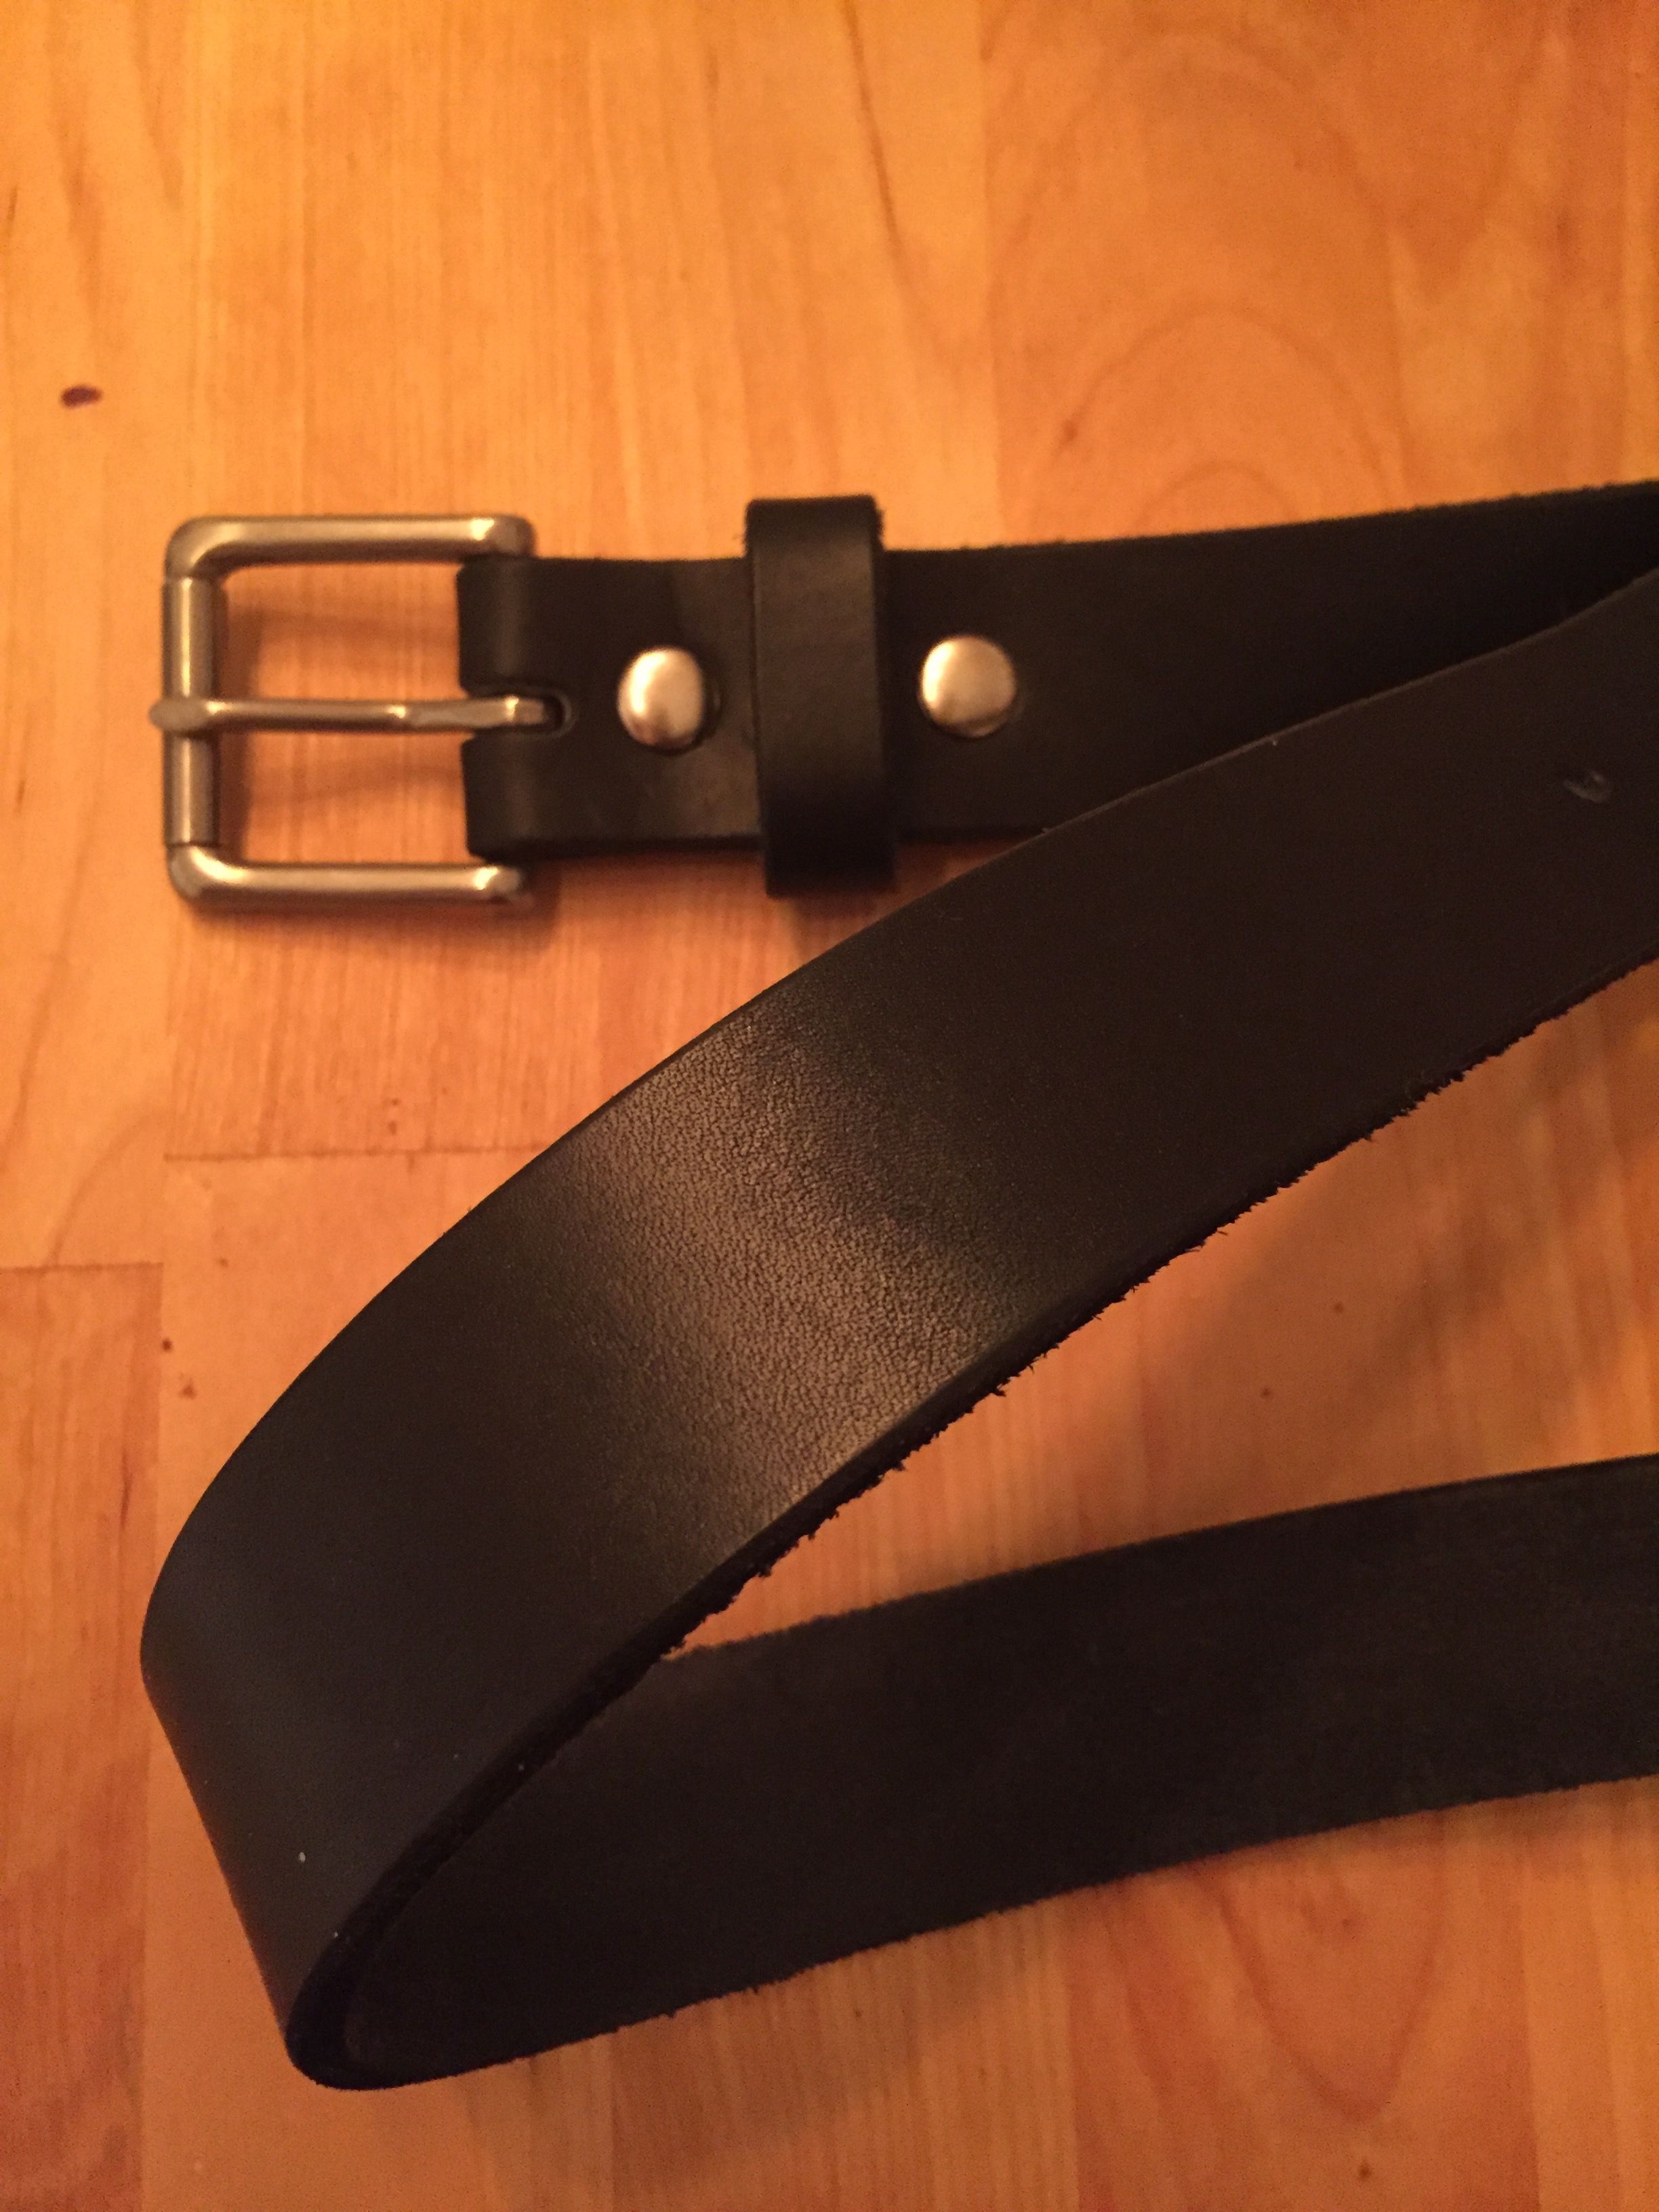 Belt recommendations - where do I get a minimalist belt? | Styleforum